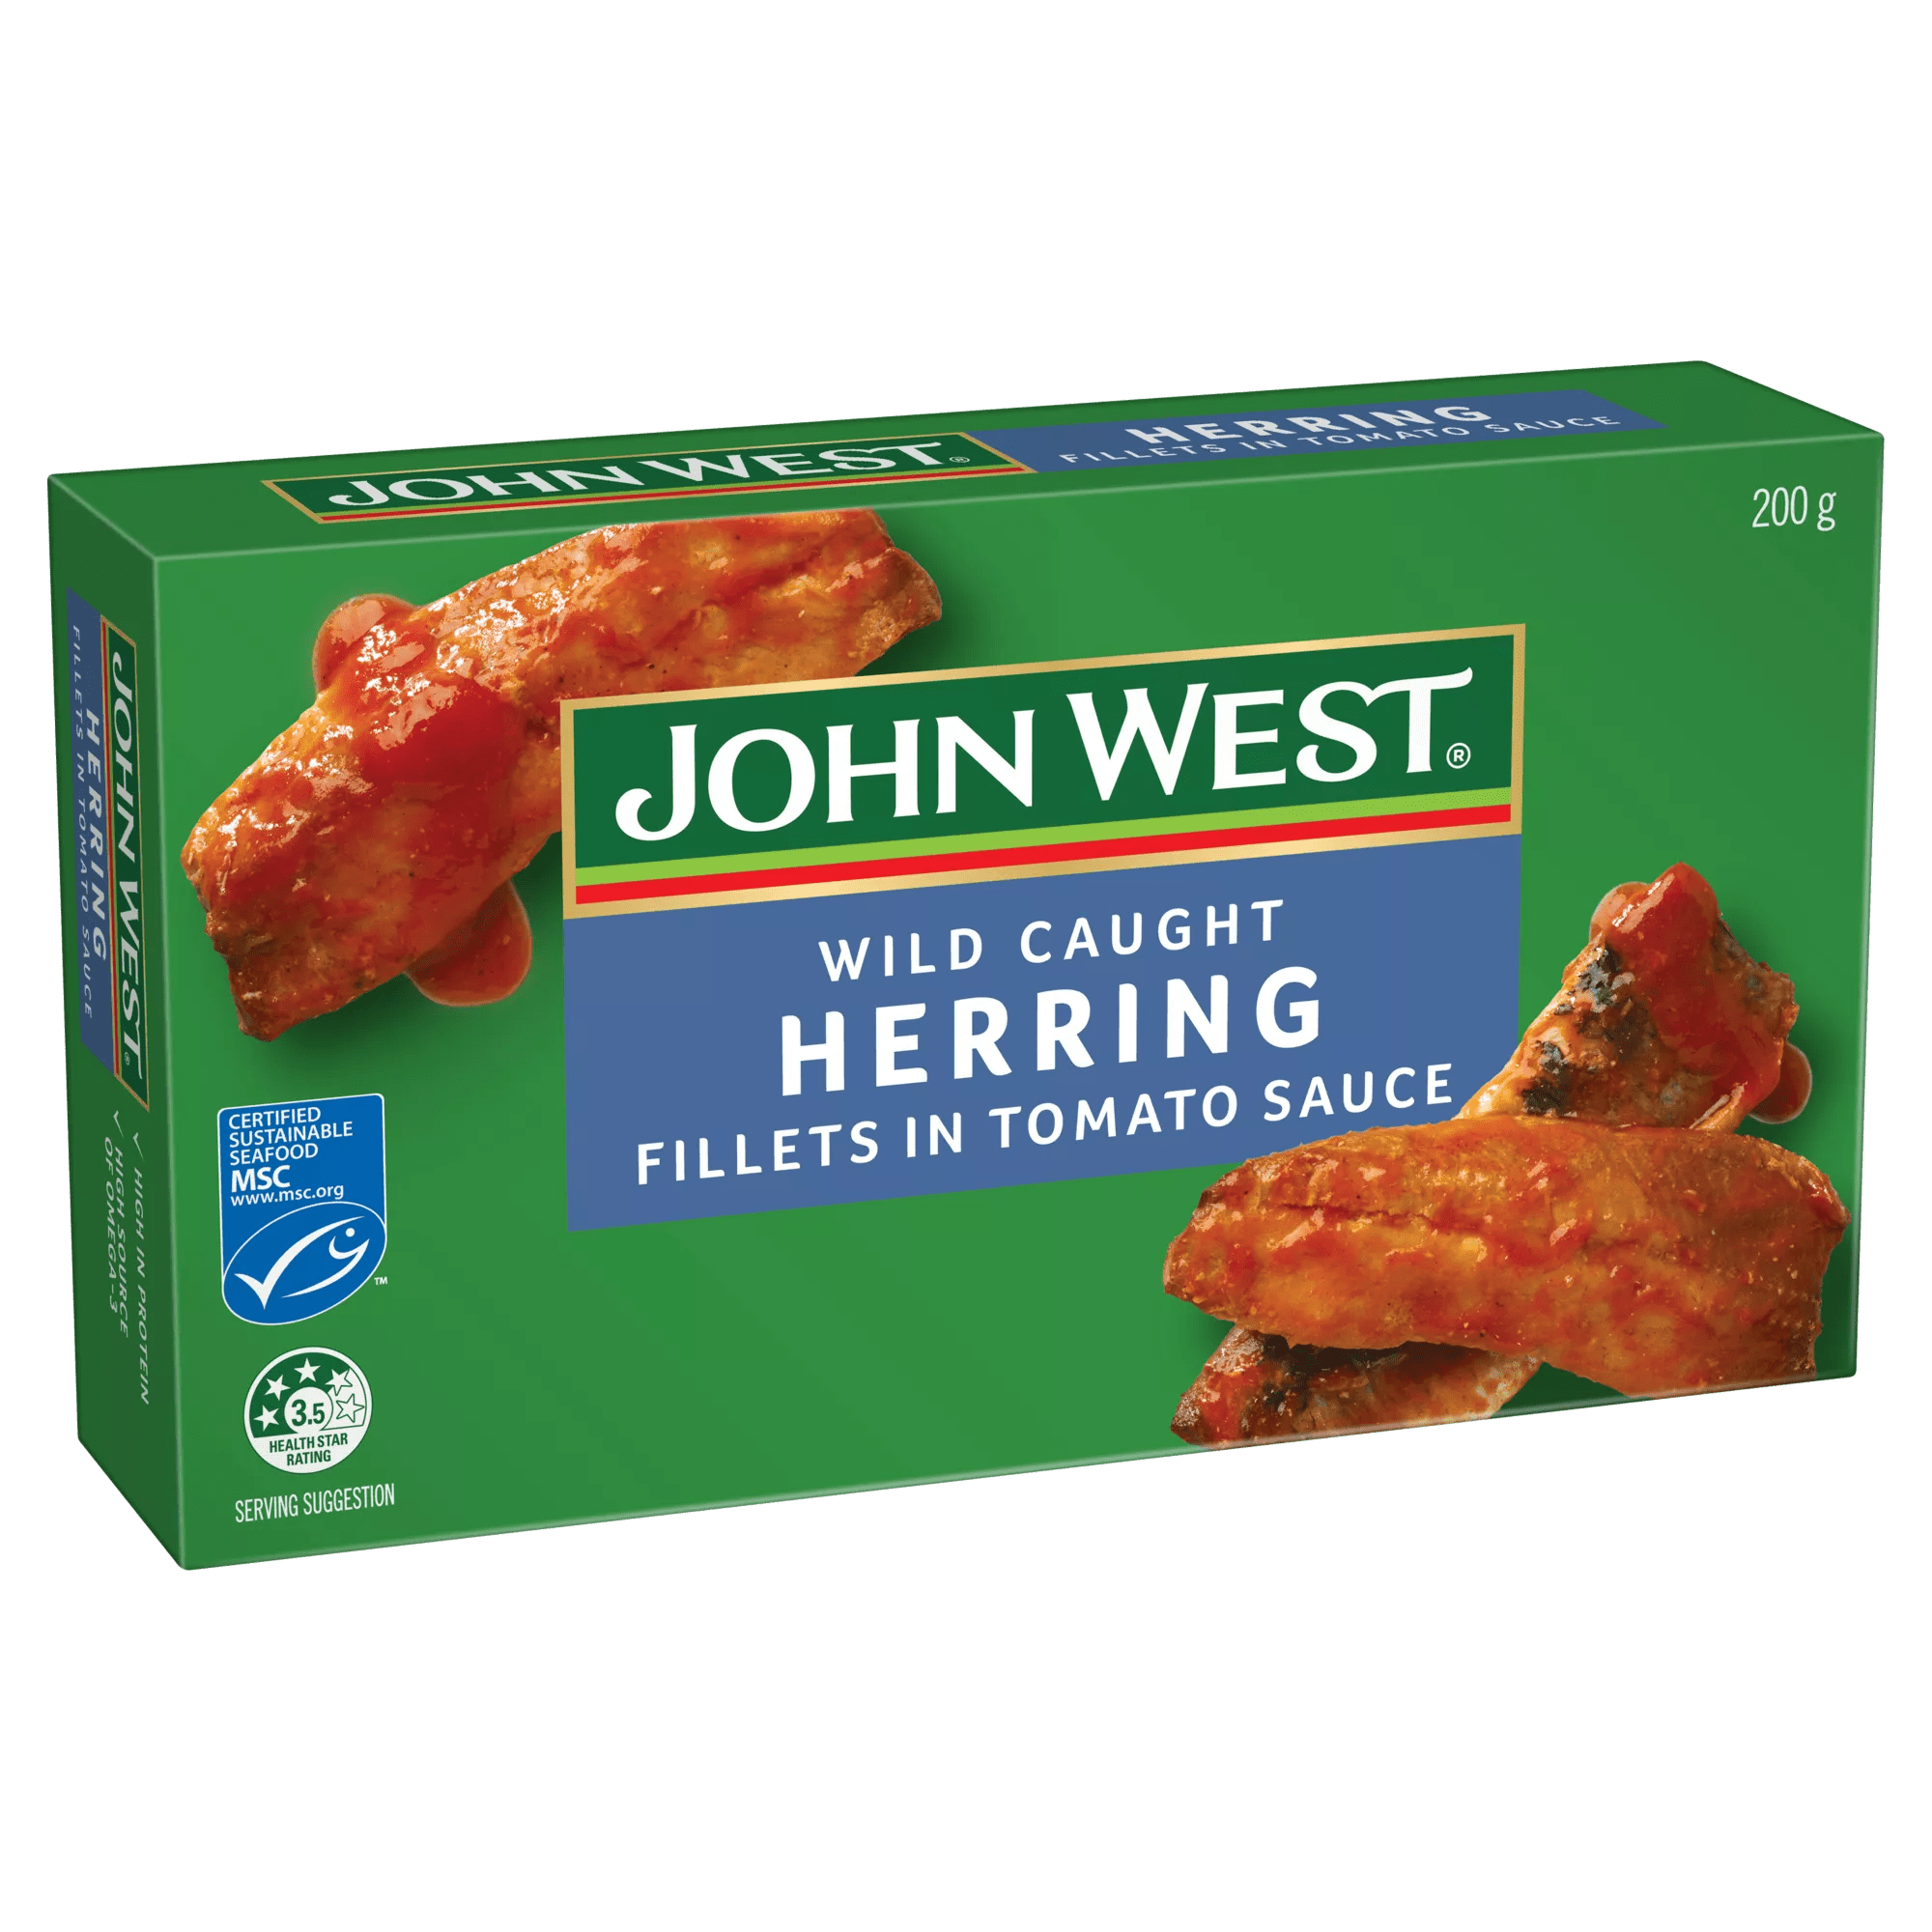 John West Wild Caught Herring Fillets in Tomato Sauce 200g